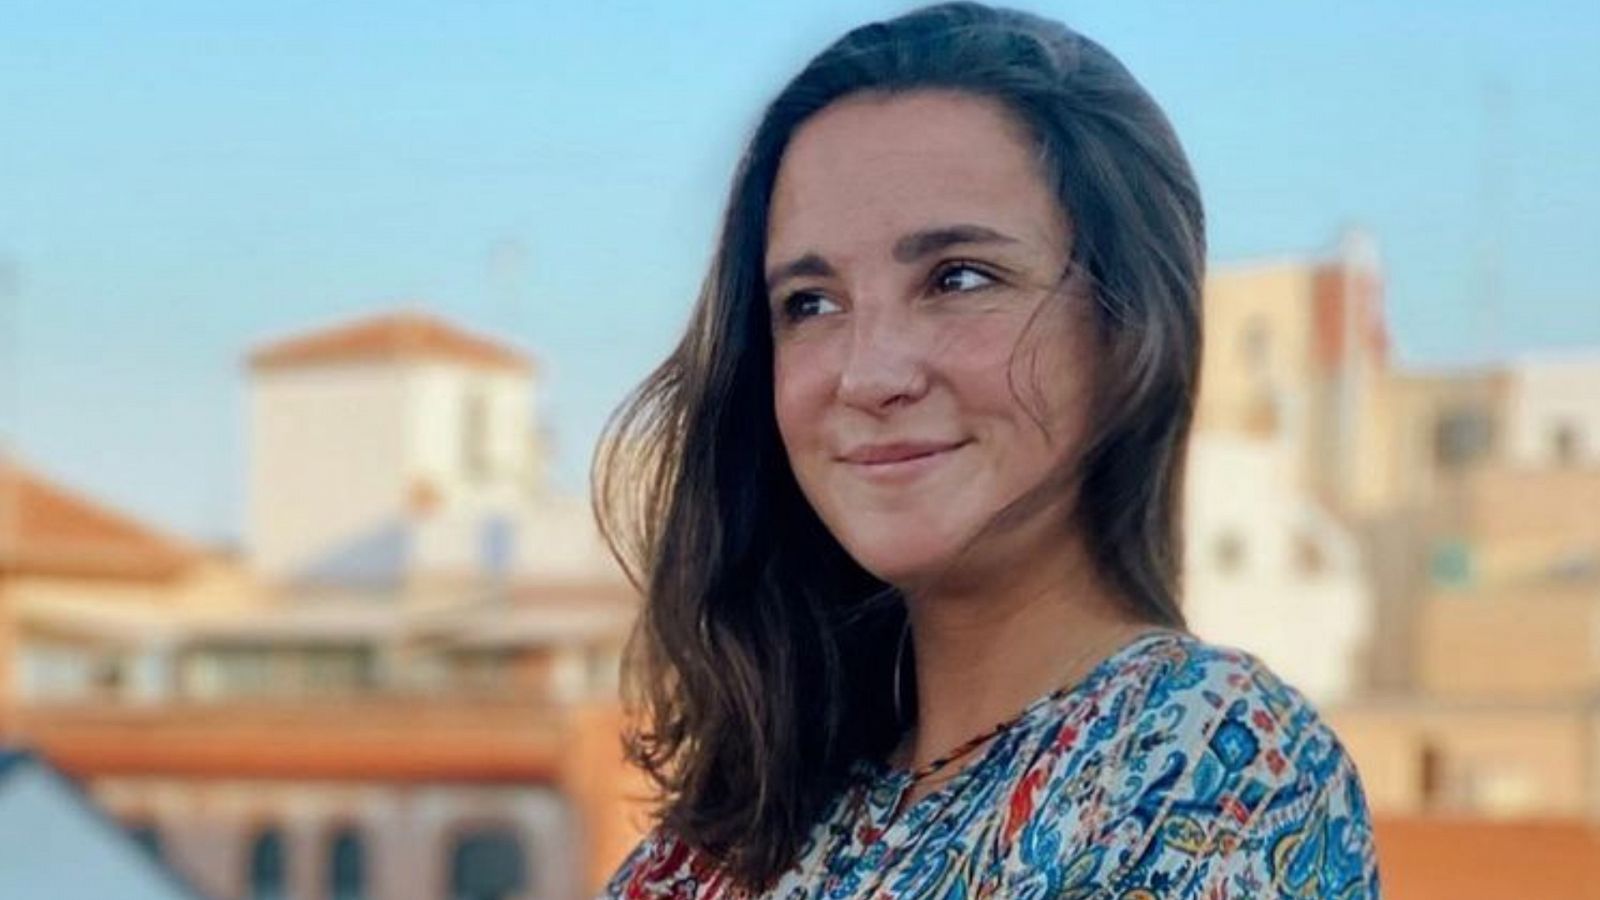 Marta Pombo vuelve a las redes sociales